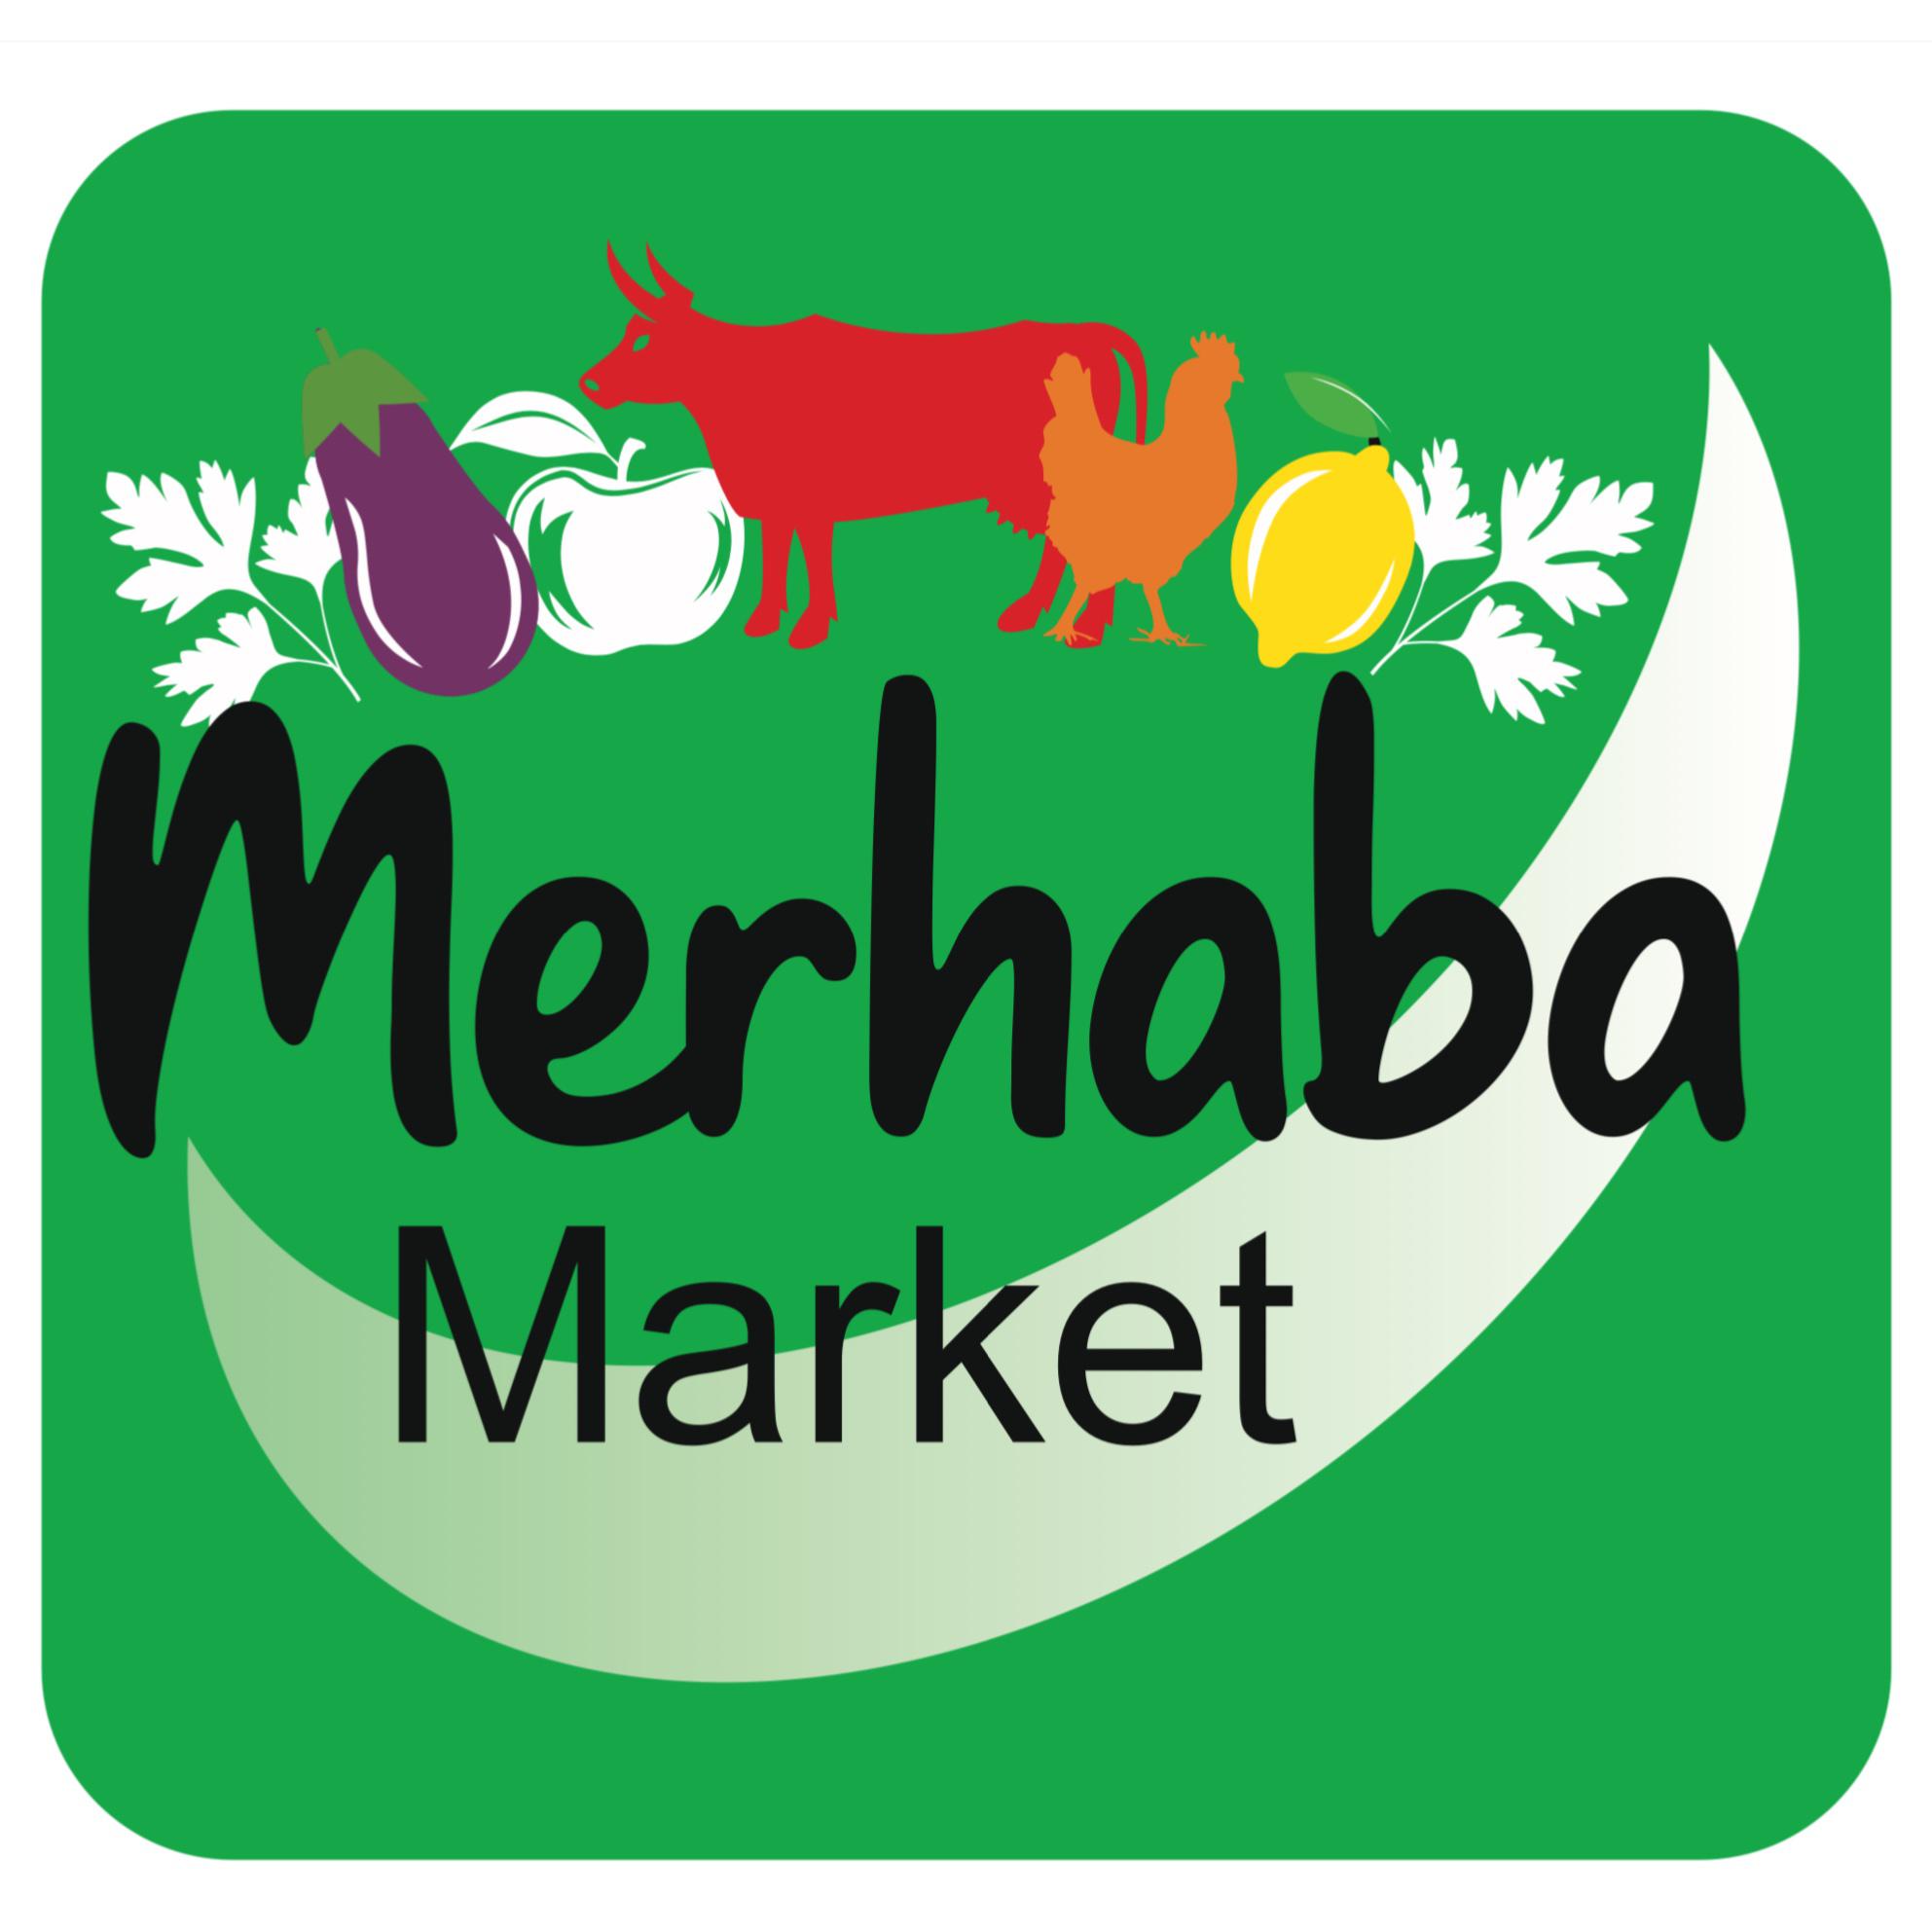 Merhaba Market in Duisburg - Logo